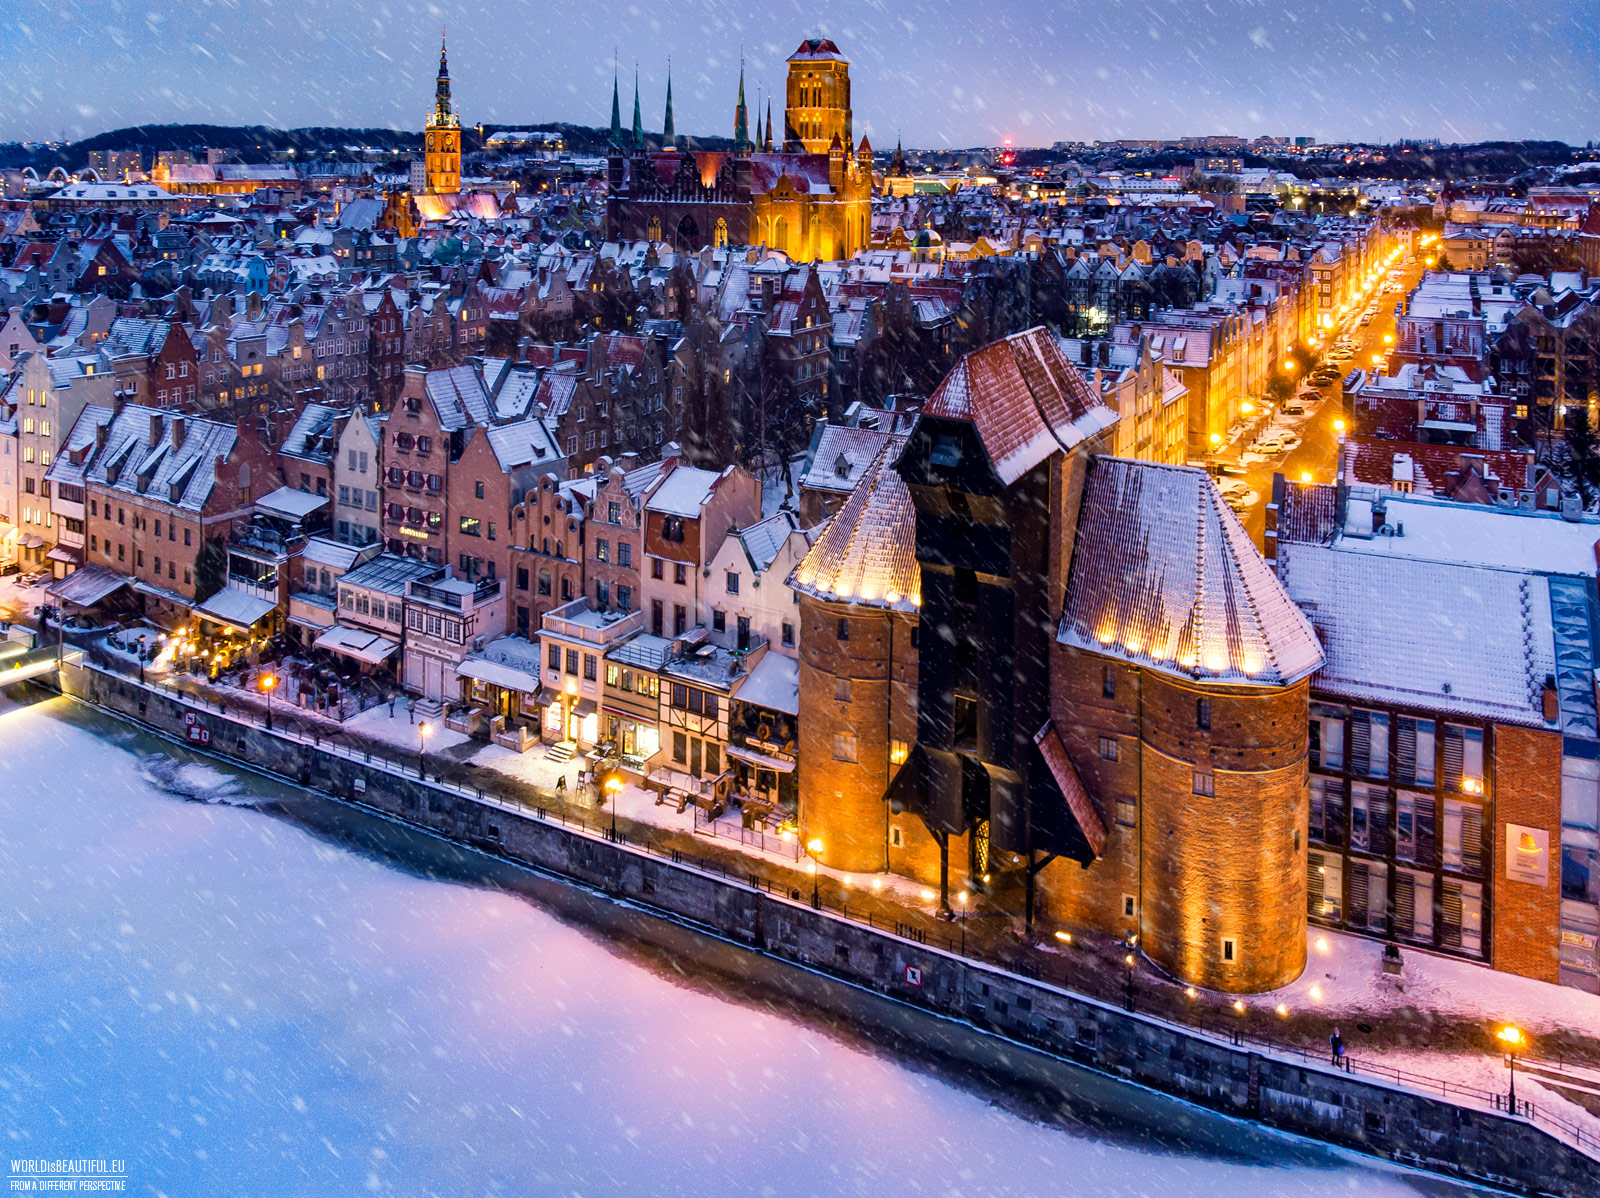 Winter evening in Gdańsk